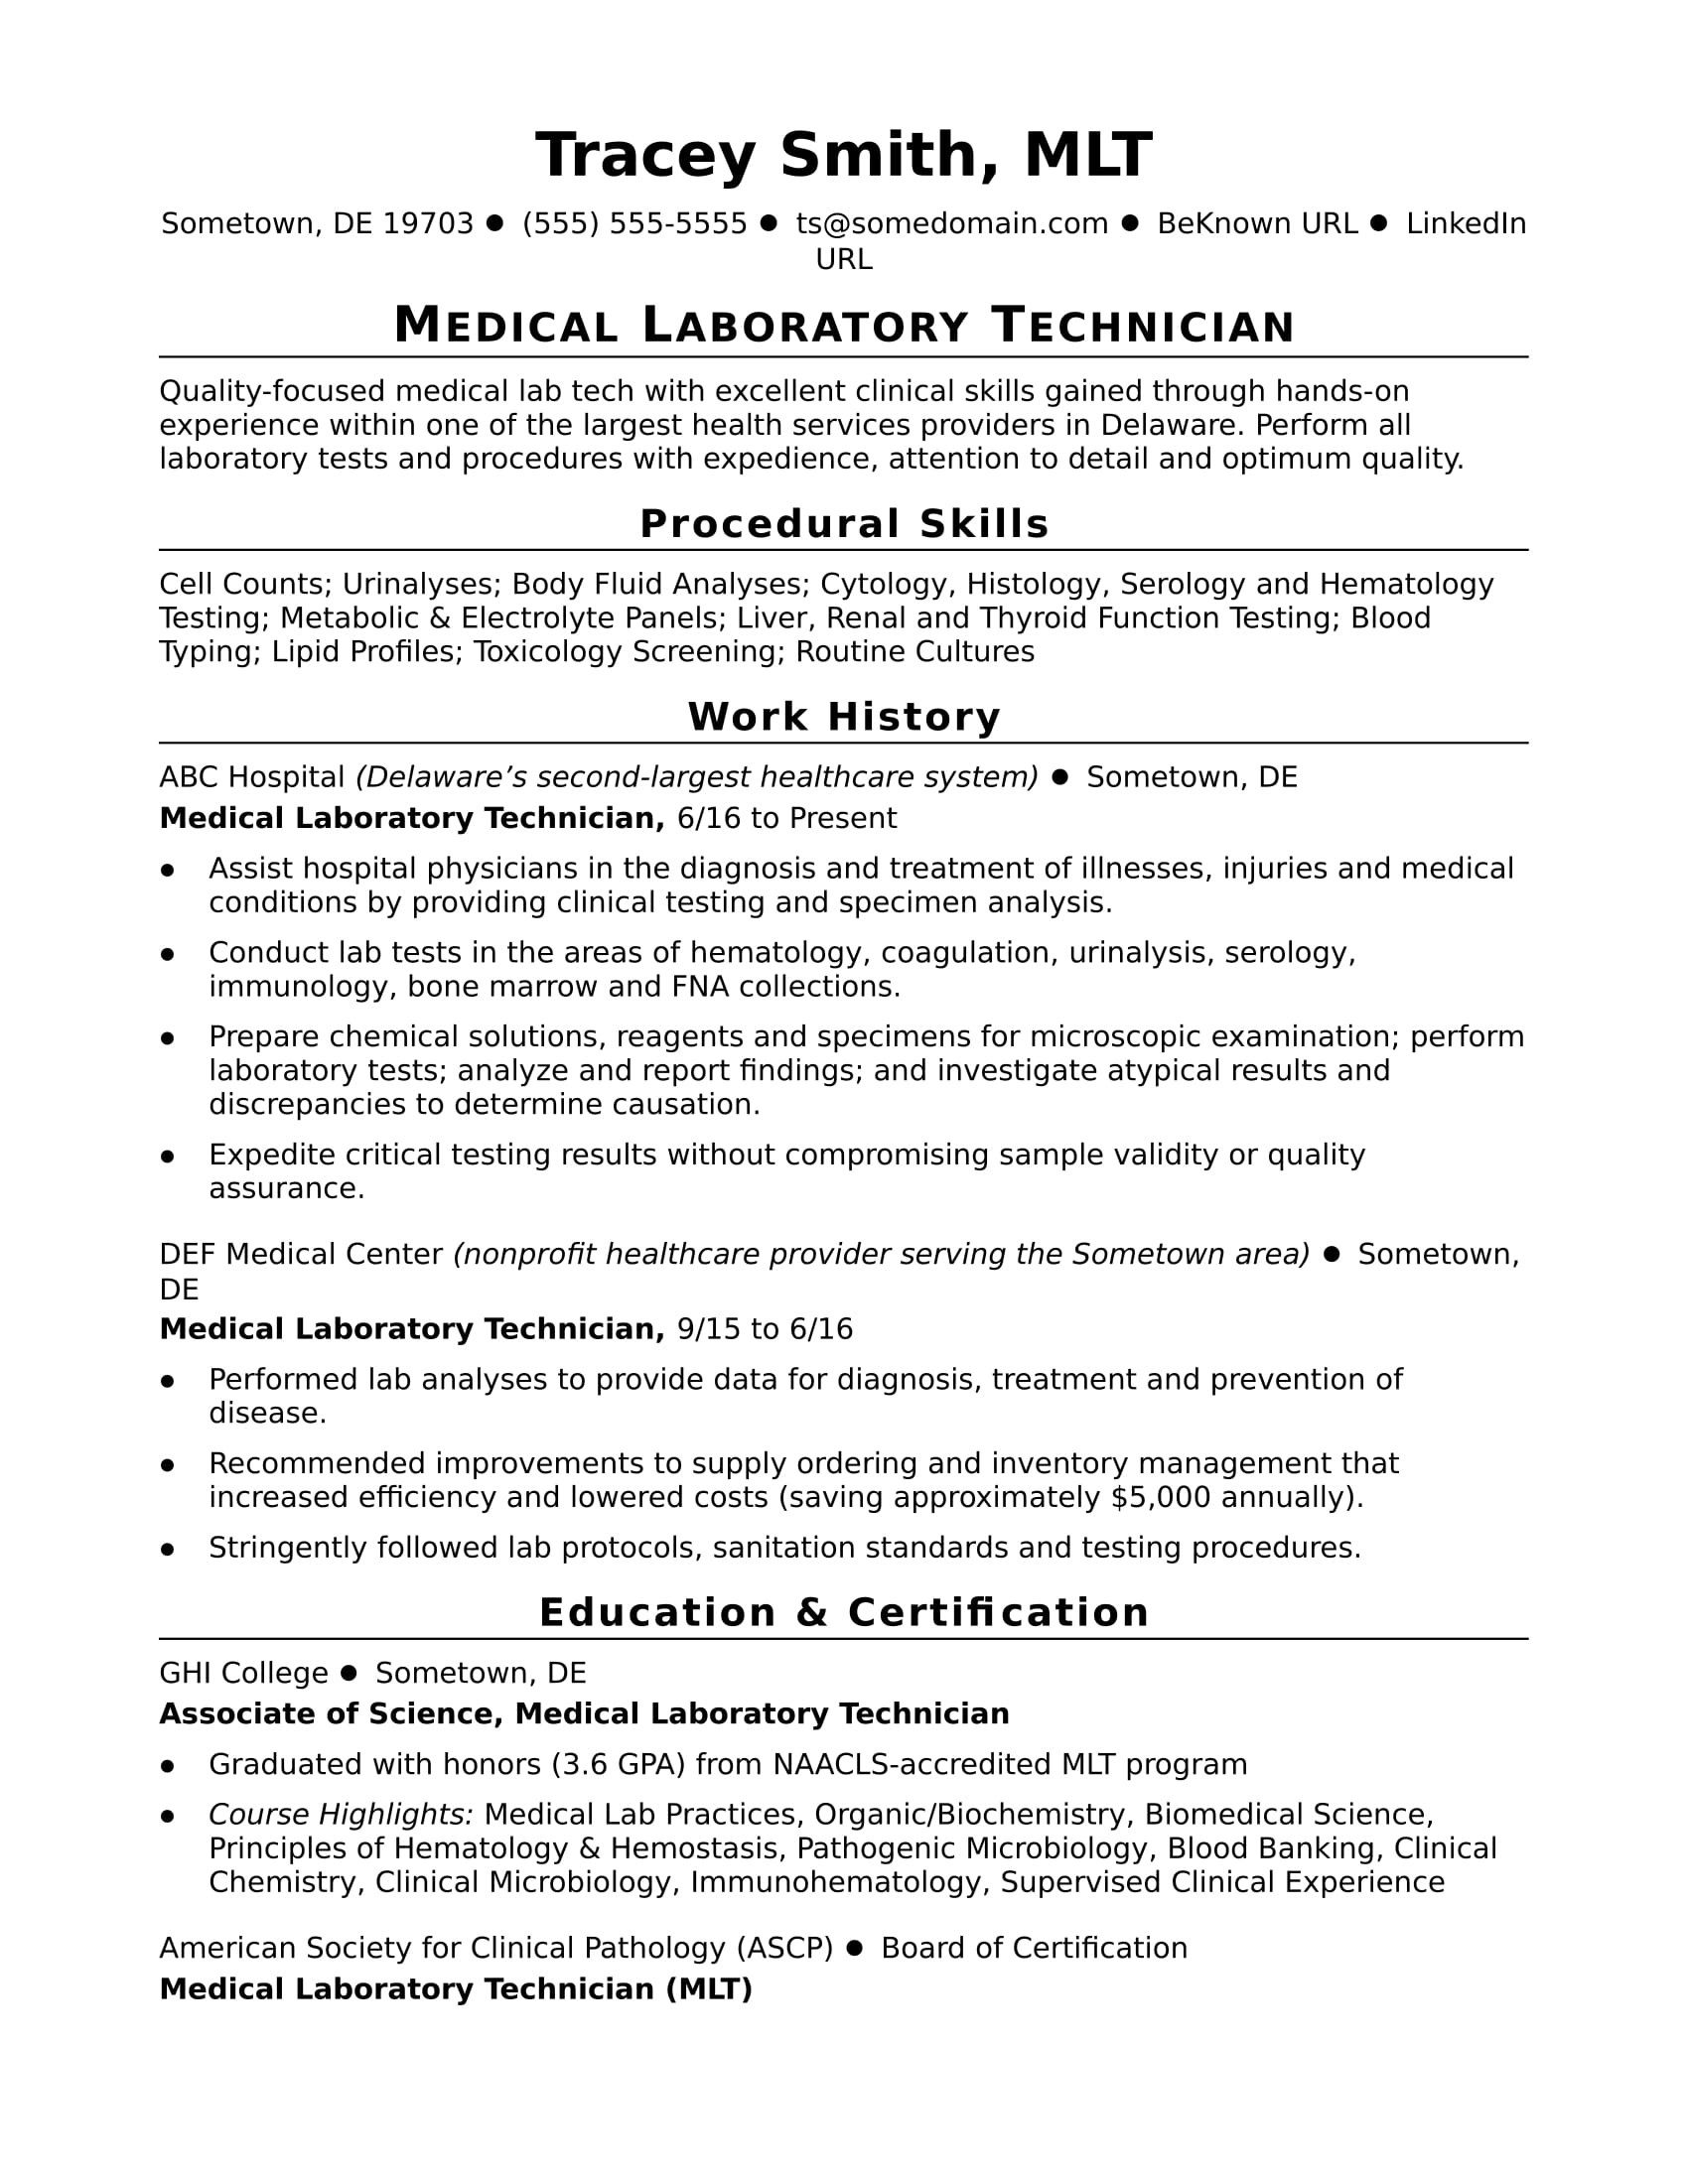 Sample Resume Entry Level Medical Inventory Sample Lab Technician Resume Monster.com